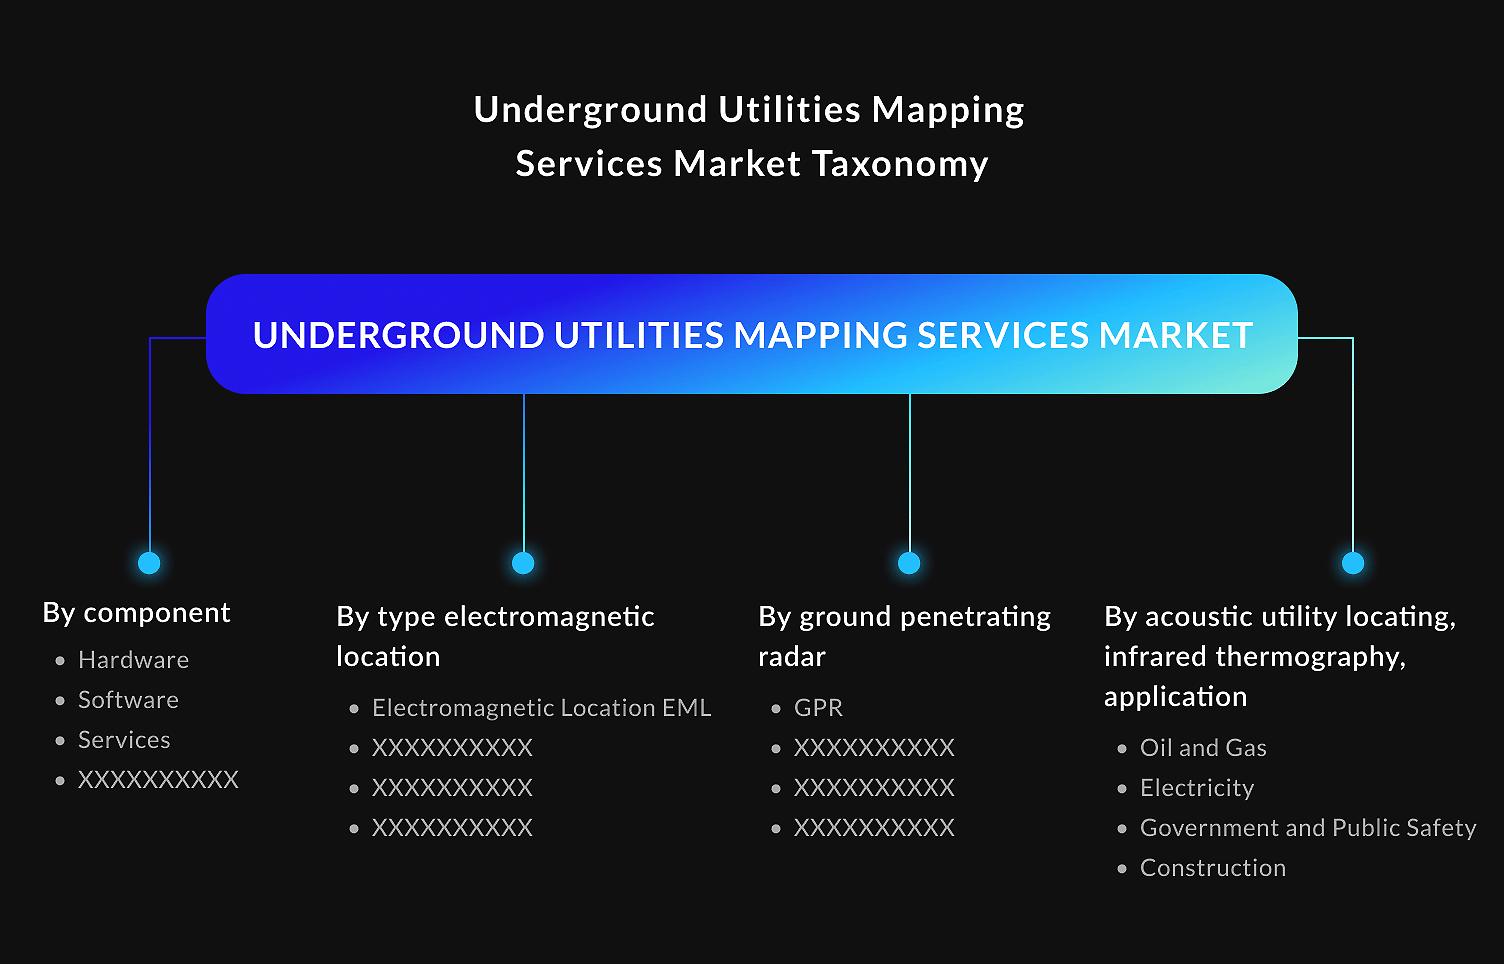 global market of underground utility mapping